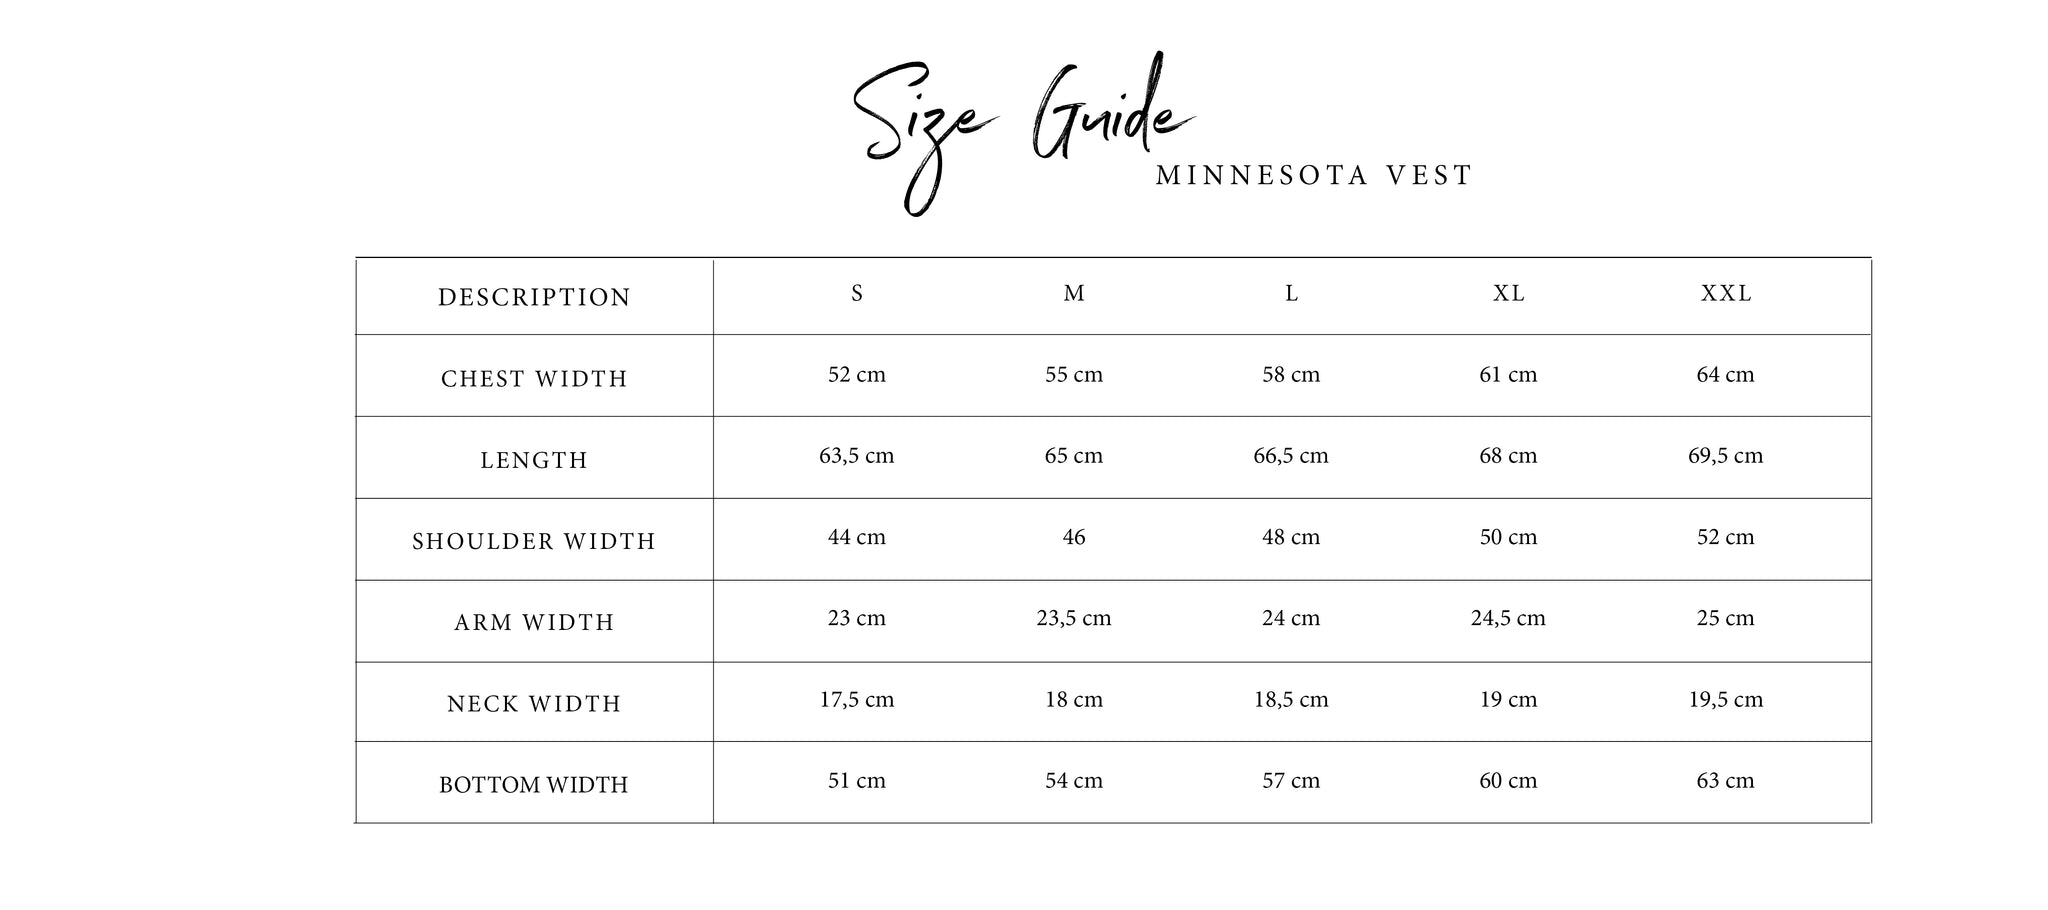 Minnesota Size Guide